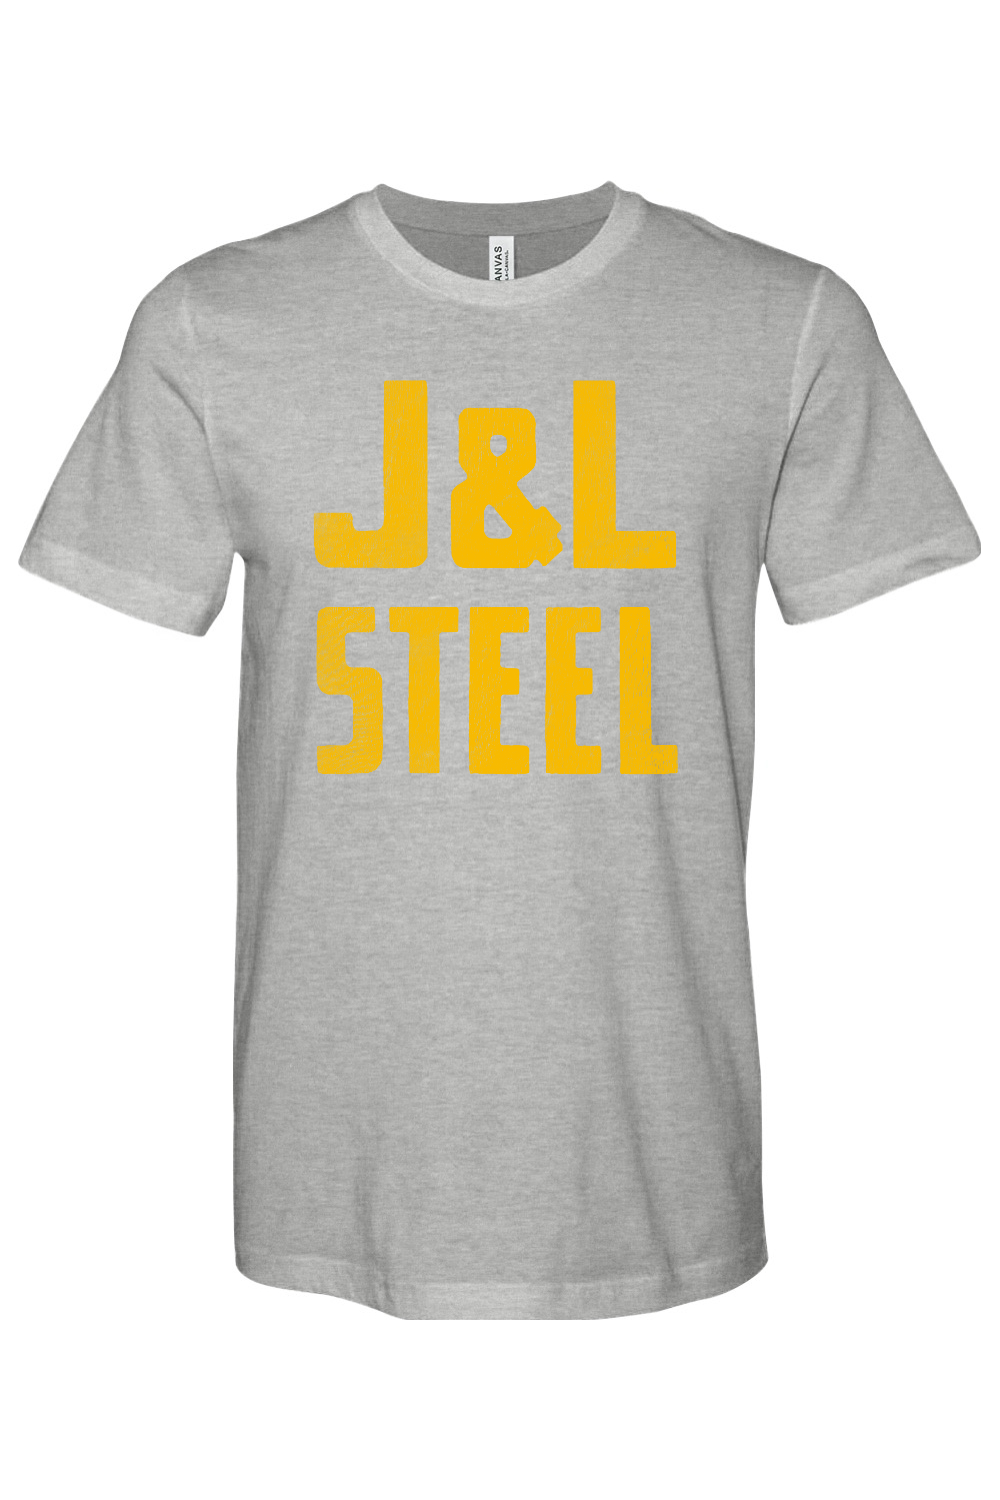 J&L Steel Retro - Bella + Canvas Heathered Jersey Tee - Yinzylvania